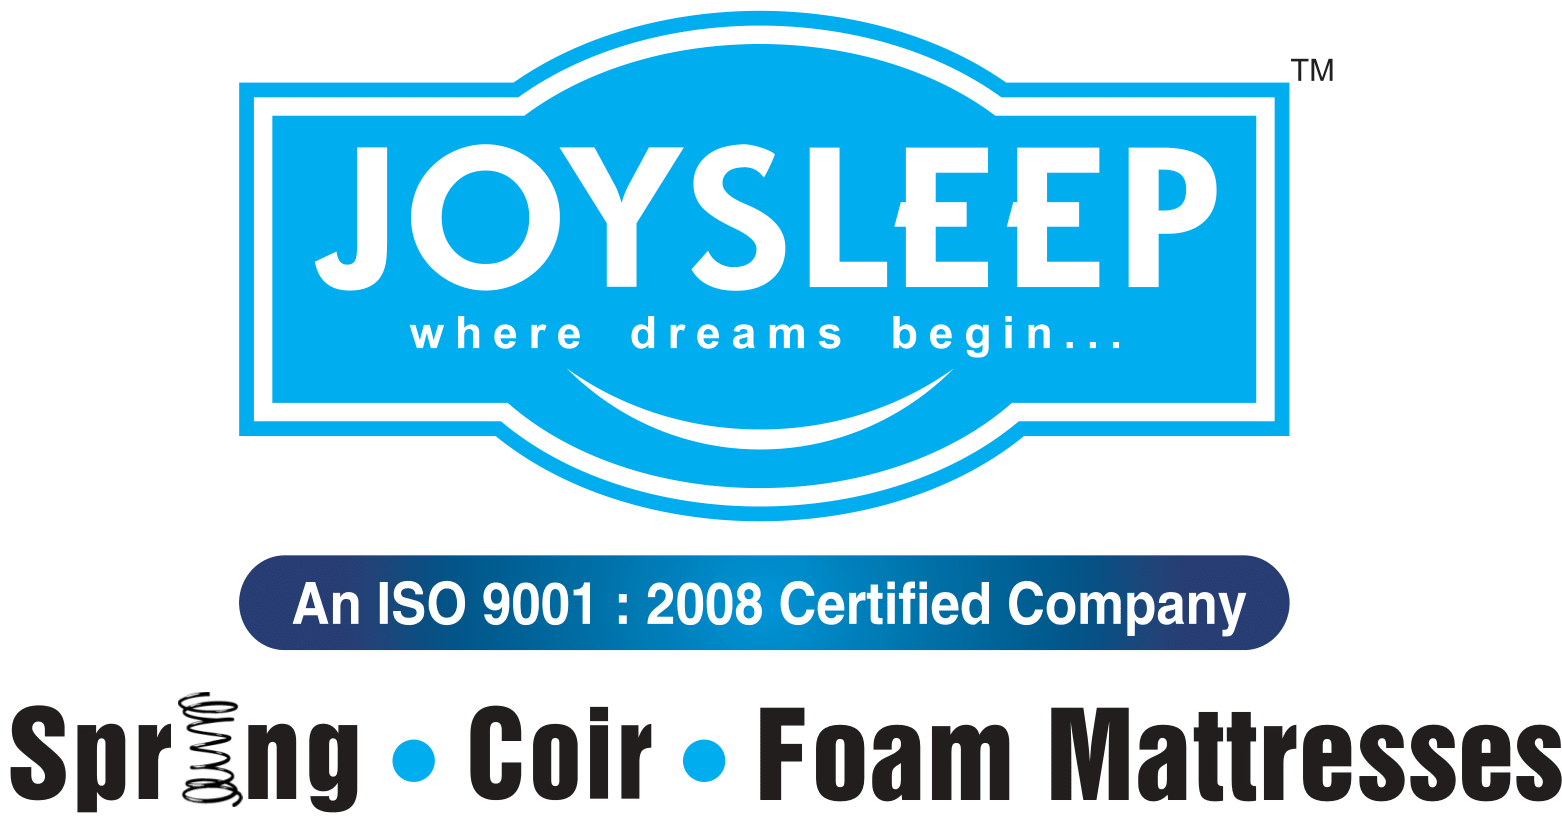 Joy Sleep